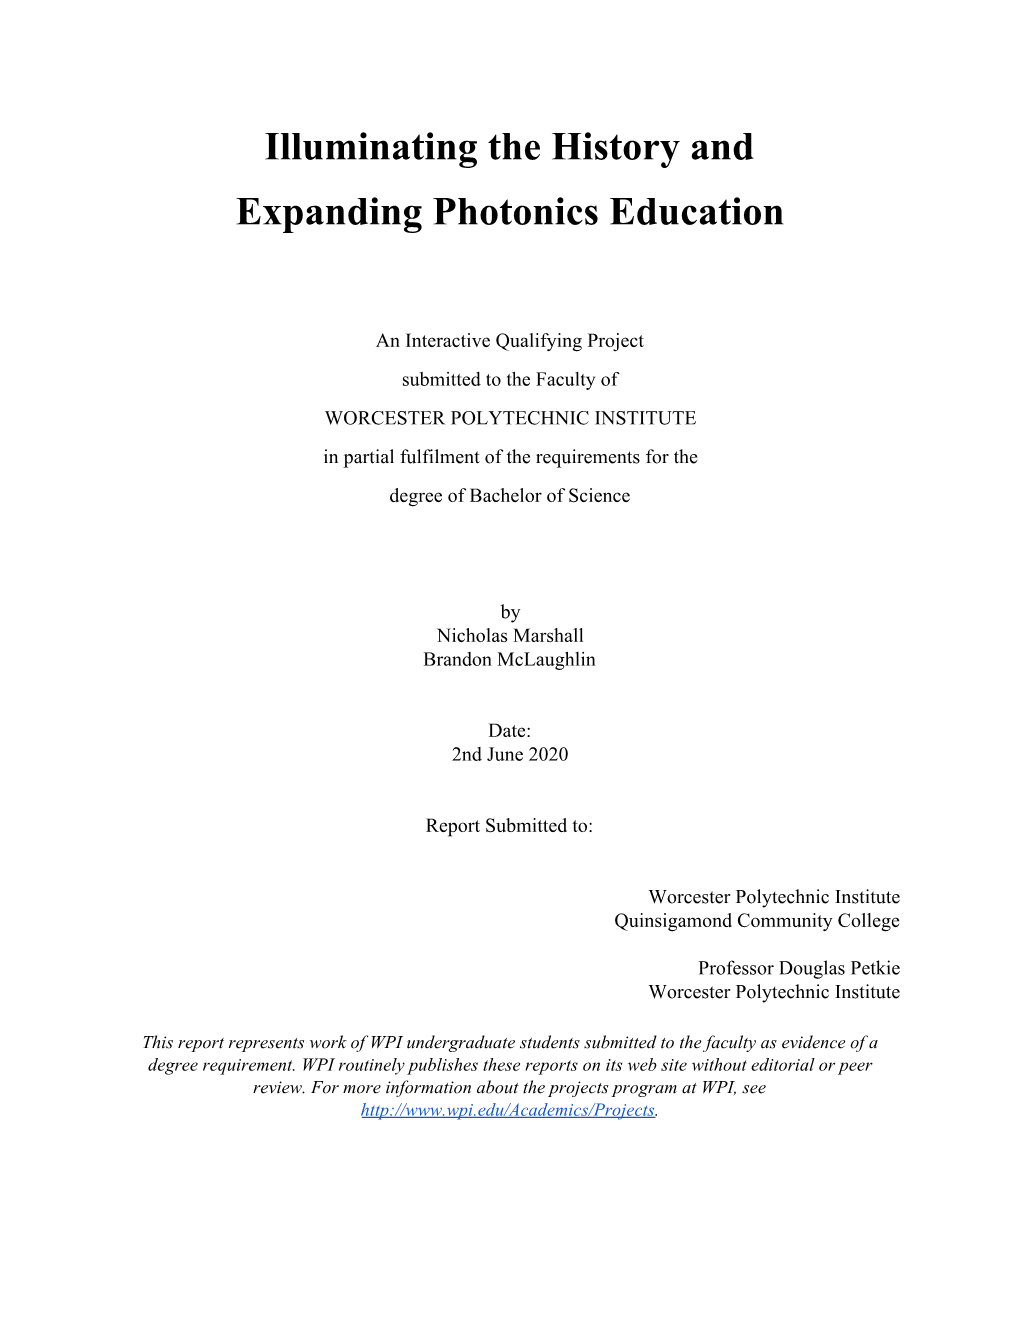 Illuminating the History and Expanding Photonics Education